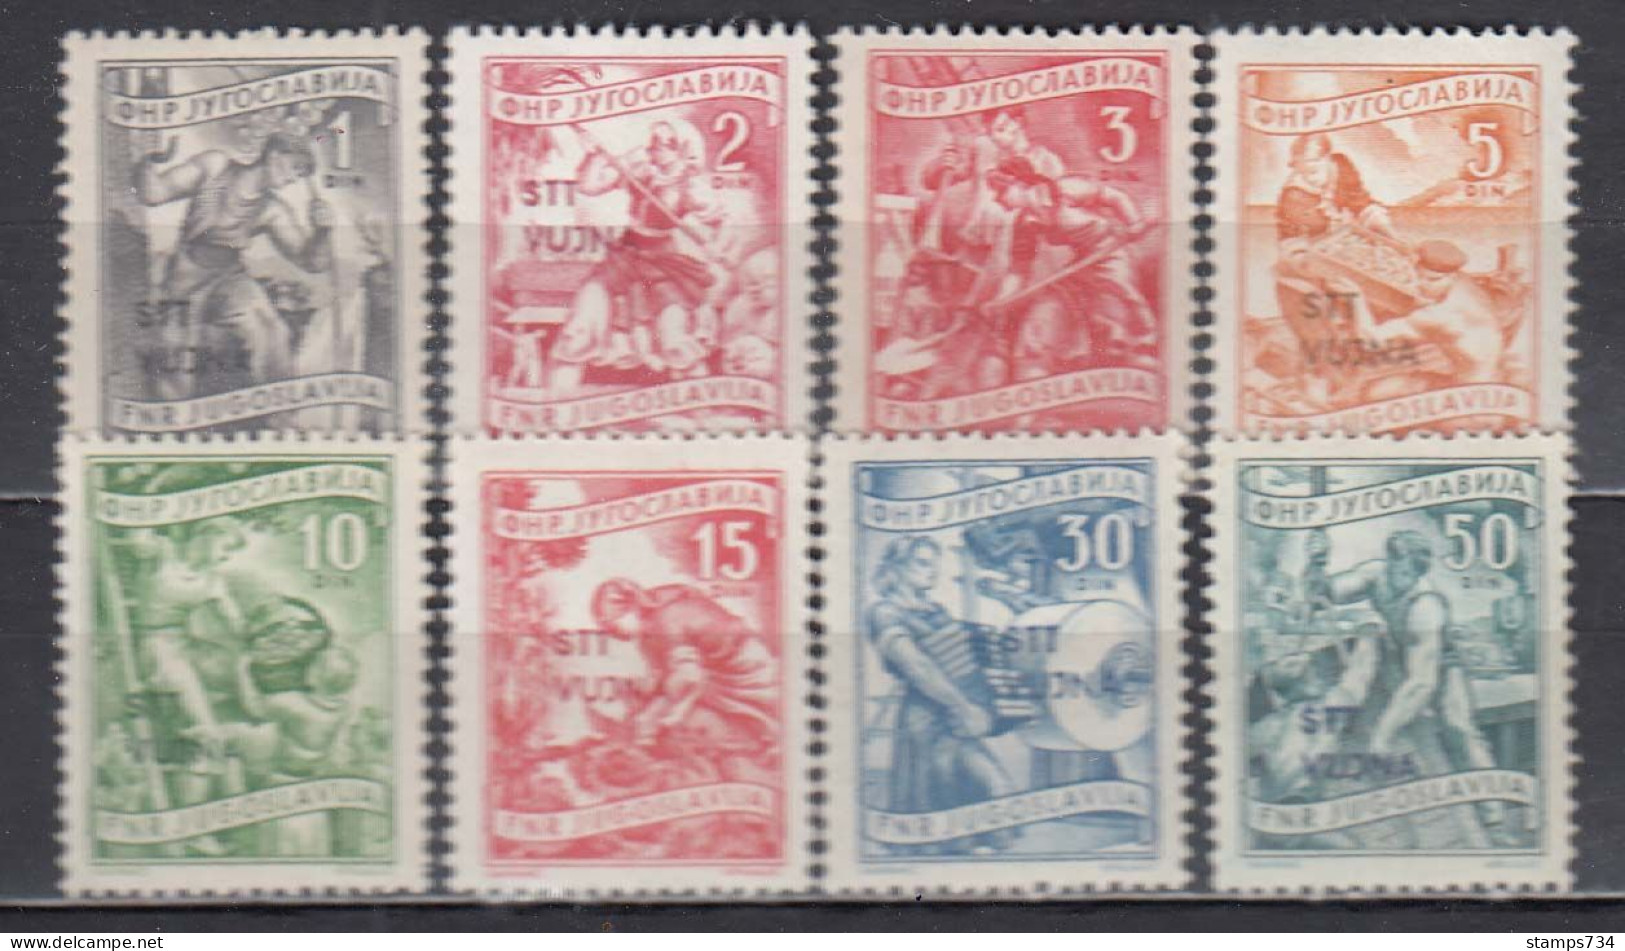 Triest B 1953 - Regular Stamps, Mi-Nr. 87/94, MNH** - Mint/hinged